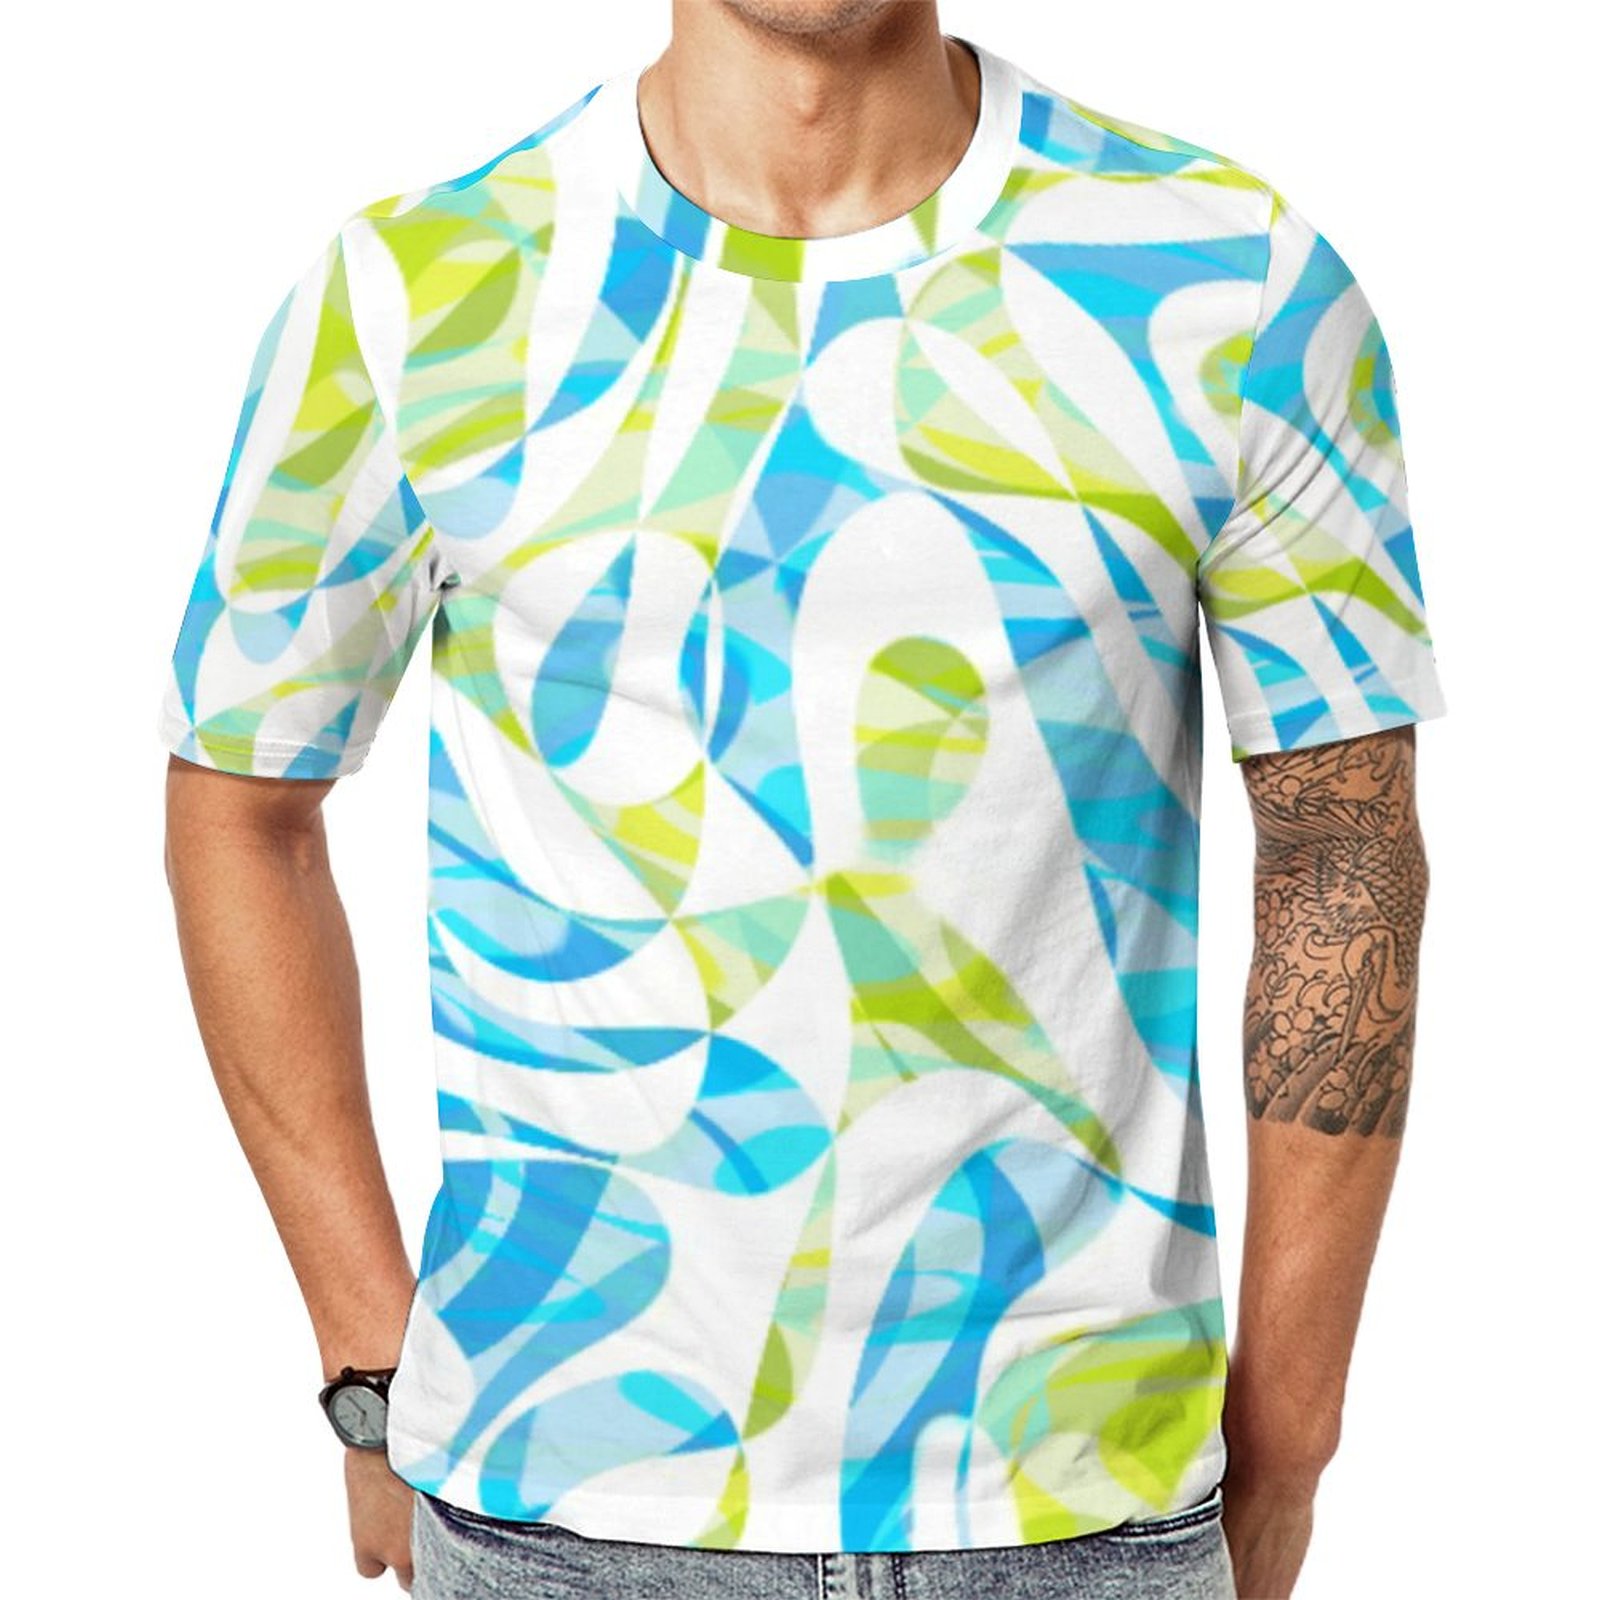 Lime Green Aqua Turquoise Swirls Art Short Sleeve Print Unisex Tshirt Summer Casual Tees for Men and Women Coolcoshirts